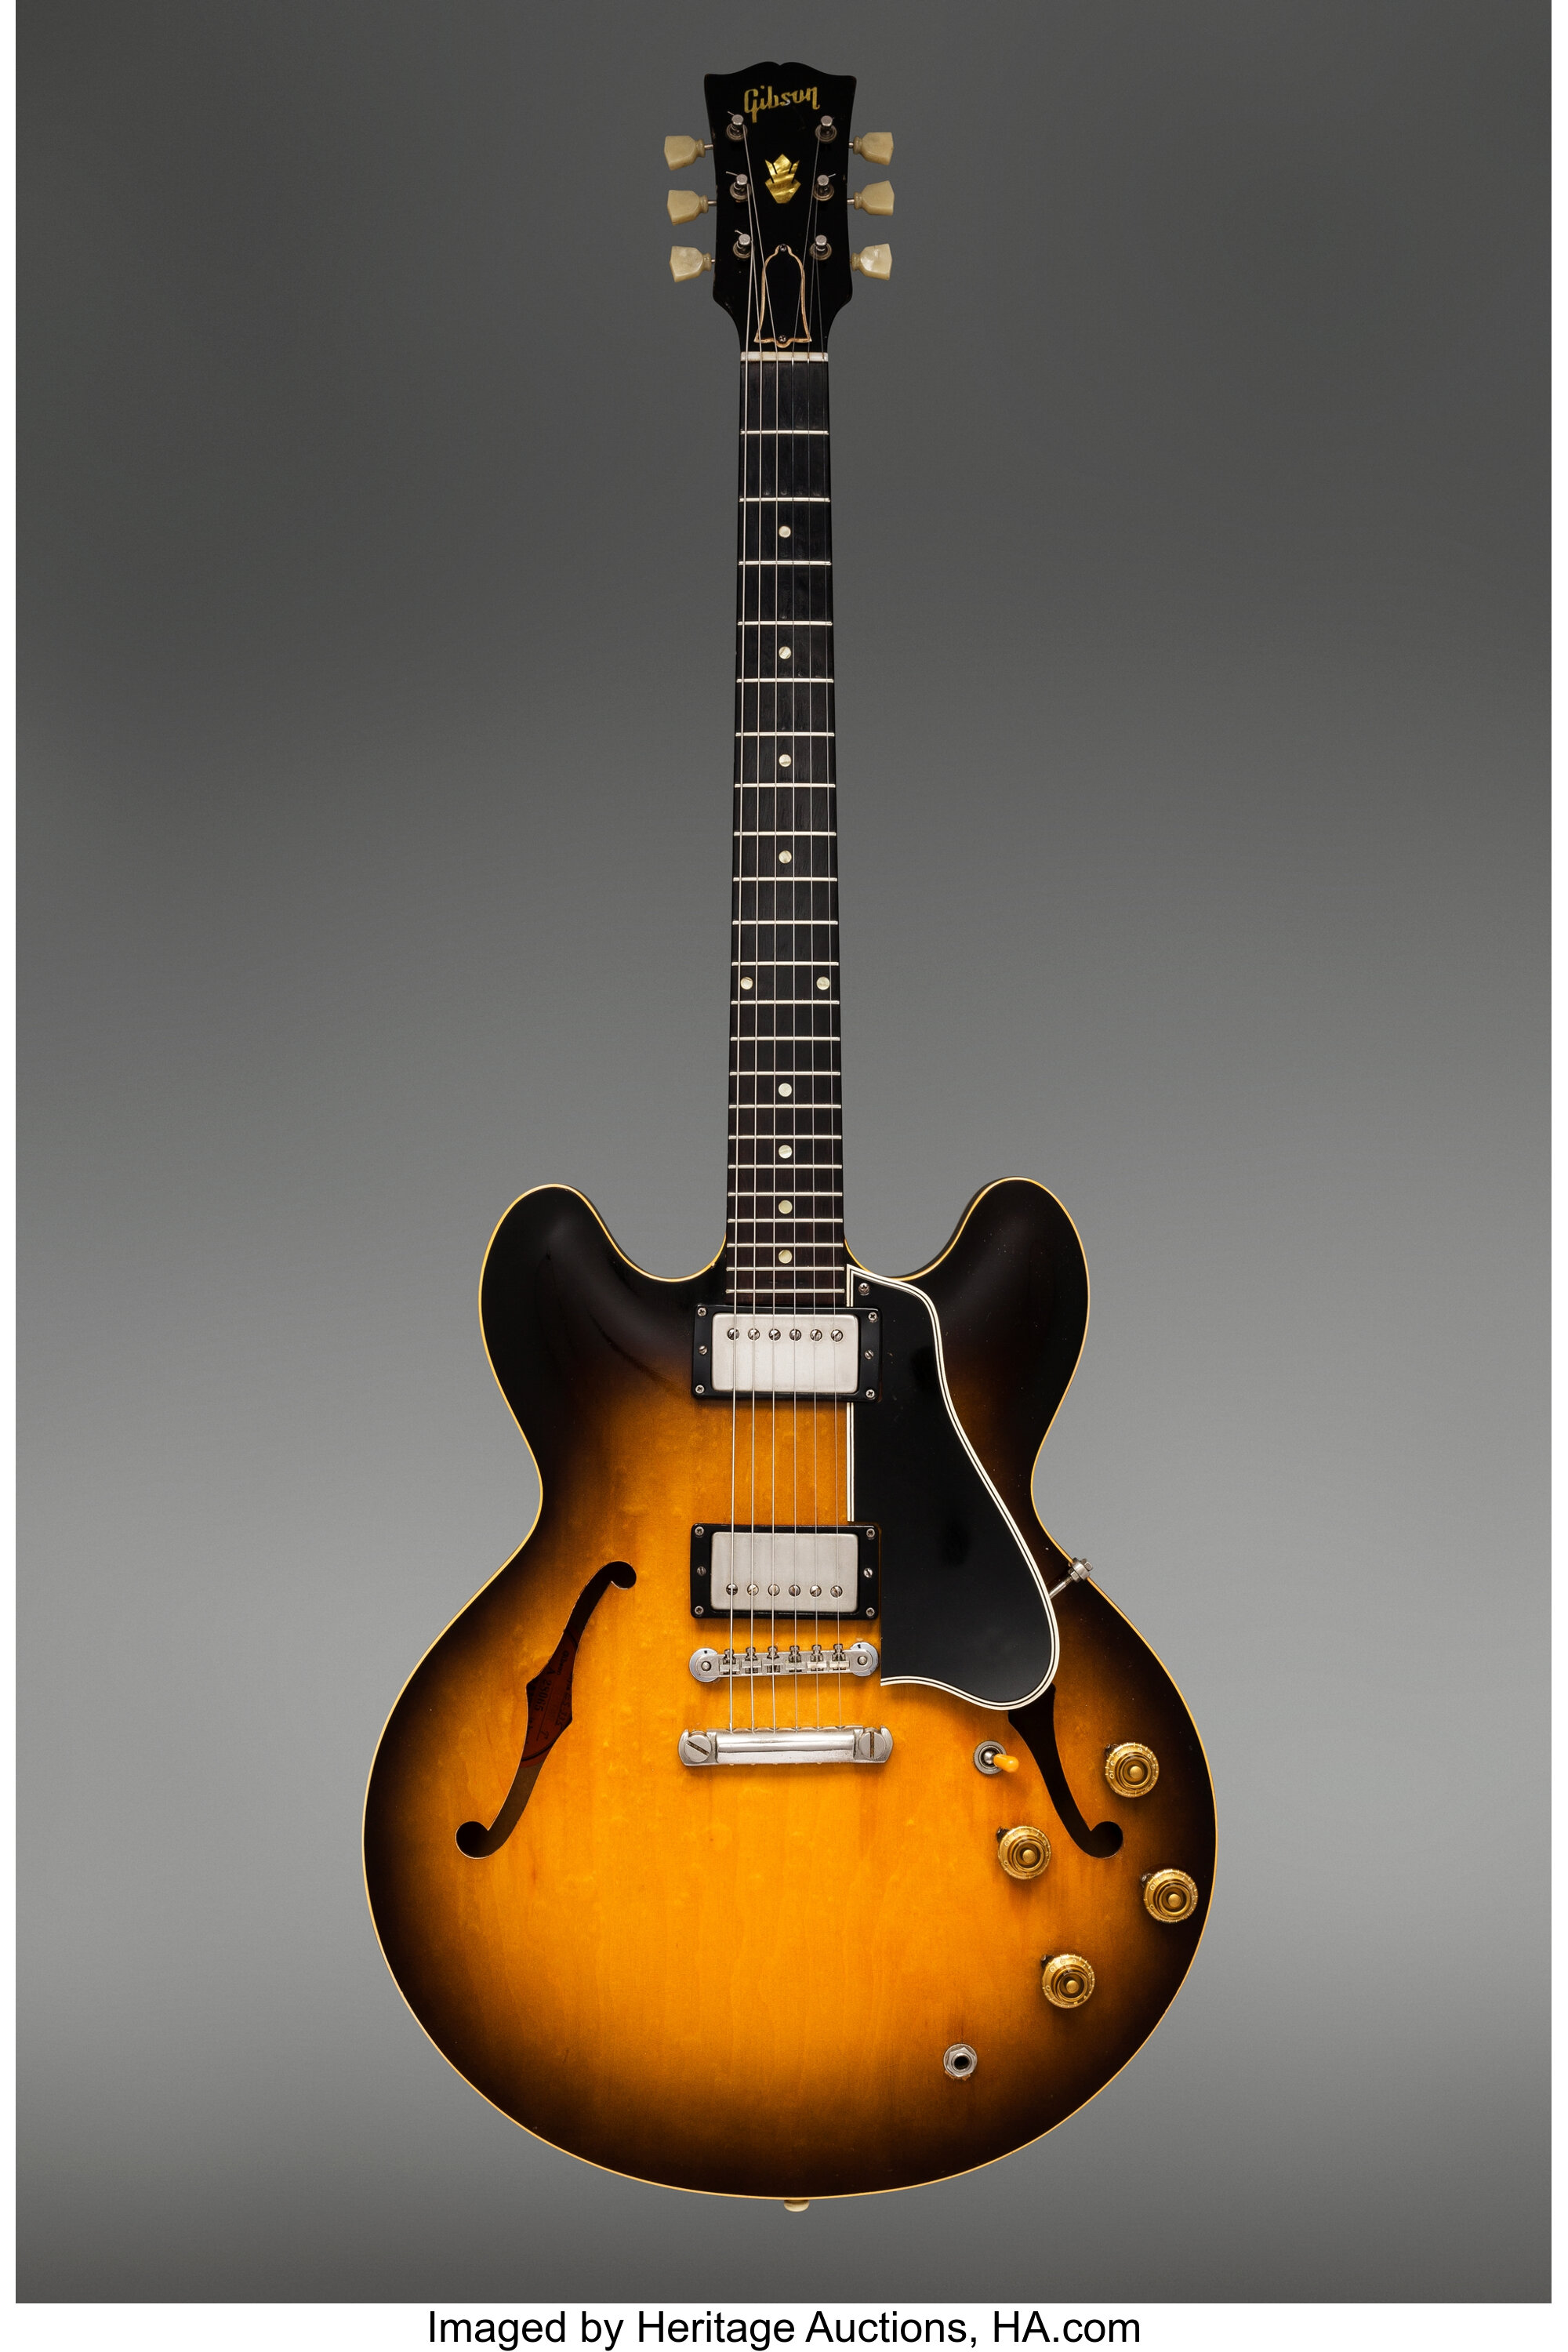 1958 Gibson ES-335 Sunburst Semi-Hollow Body Electric Guitar